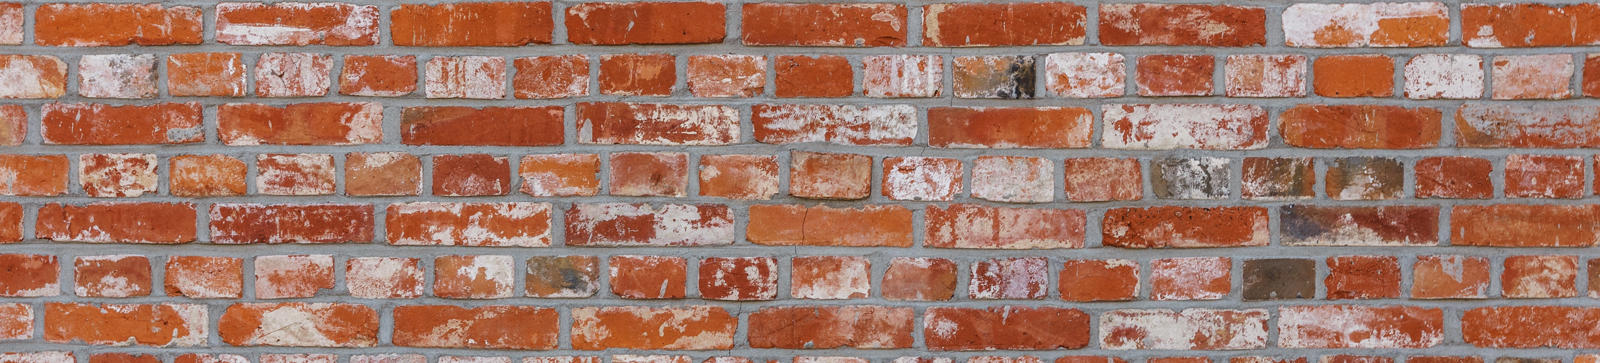 Brick Wall 2022 12 15 21 48 50 Utc